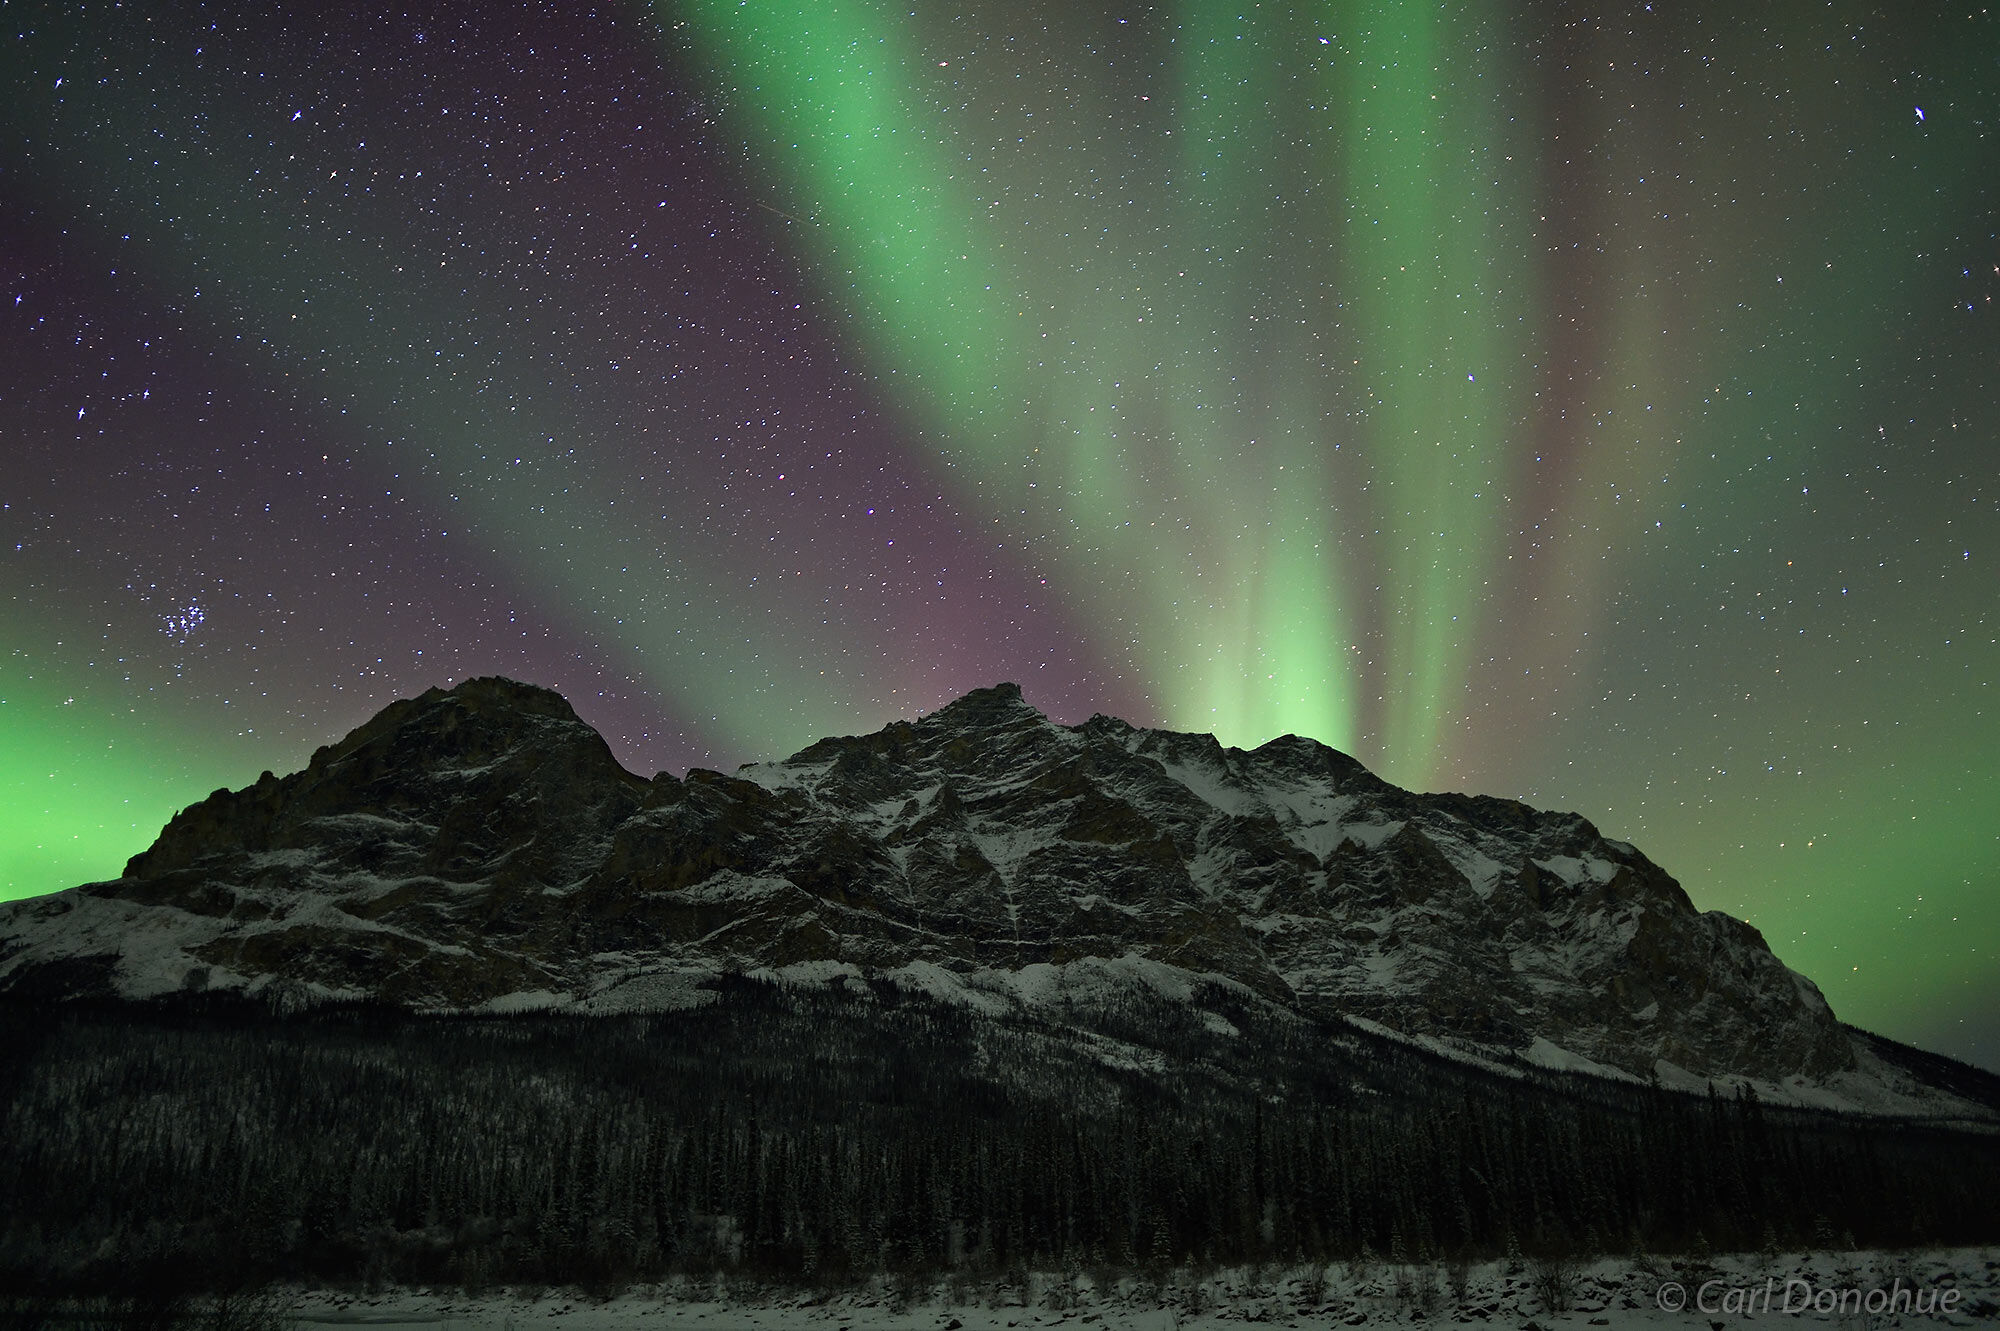 A massive aurora display over the Brooks Mountain Range. Aurora borealis photo, or northern lights, Gates of the Arctic National...